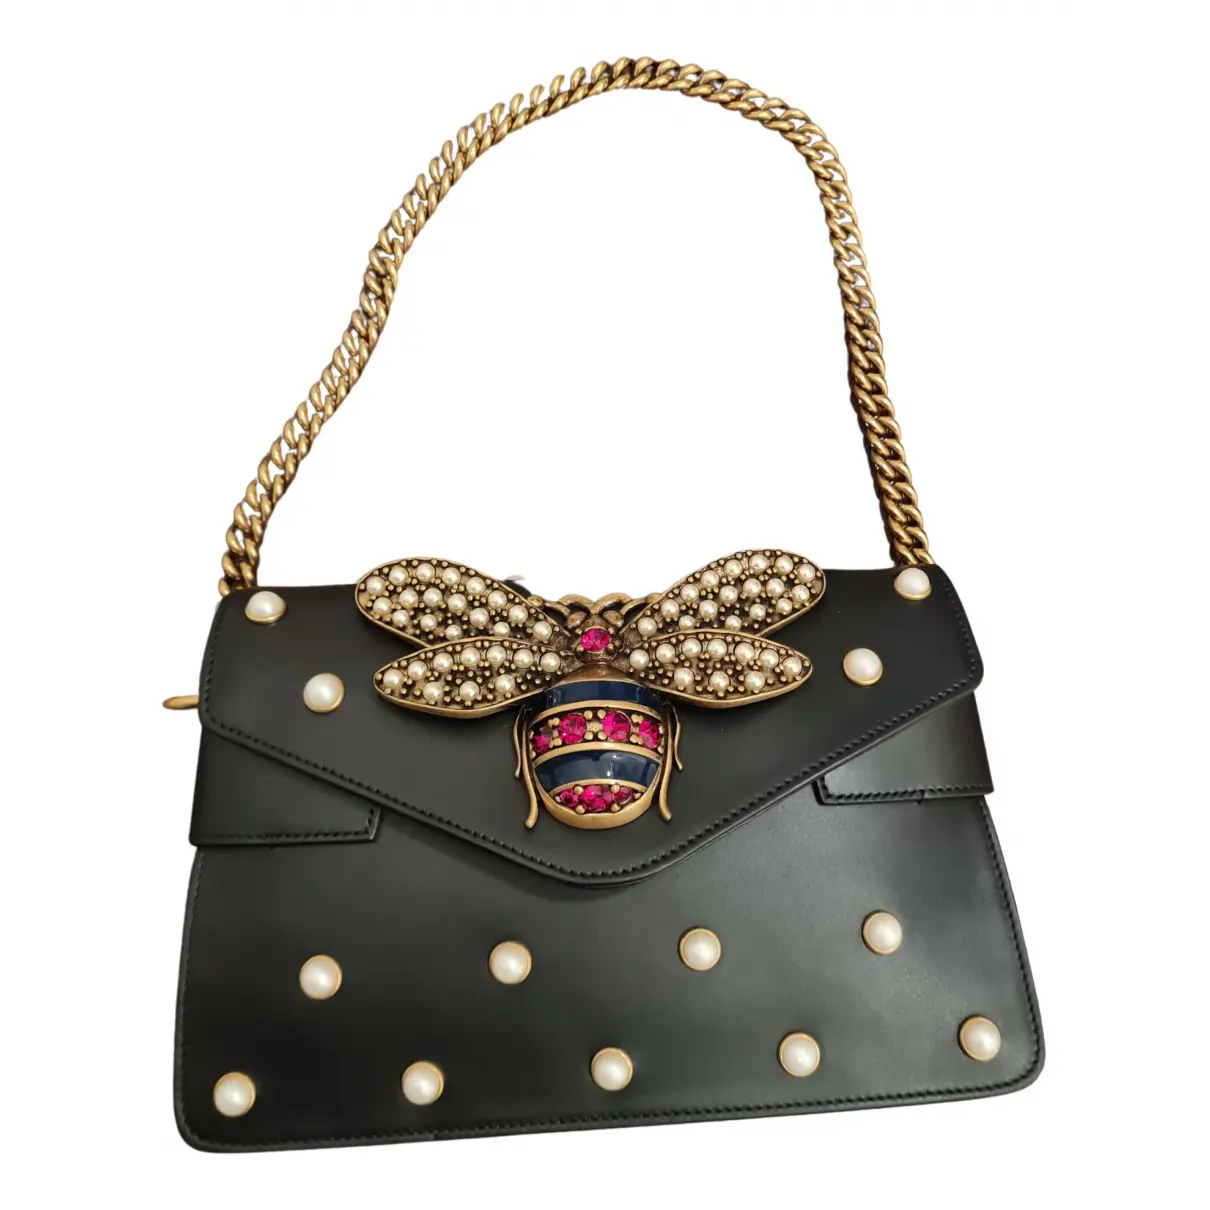 Broadway leather handbag Gucci